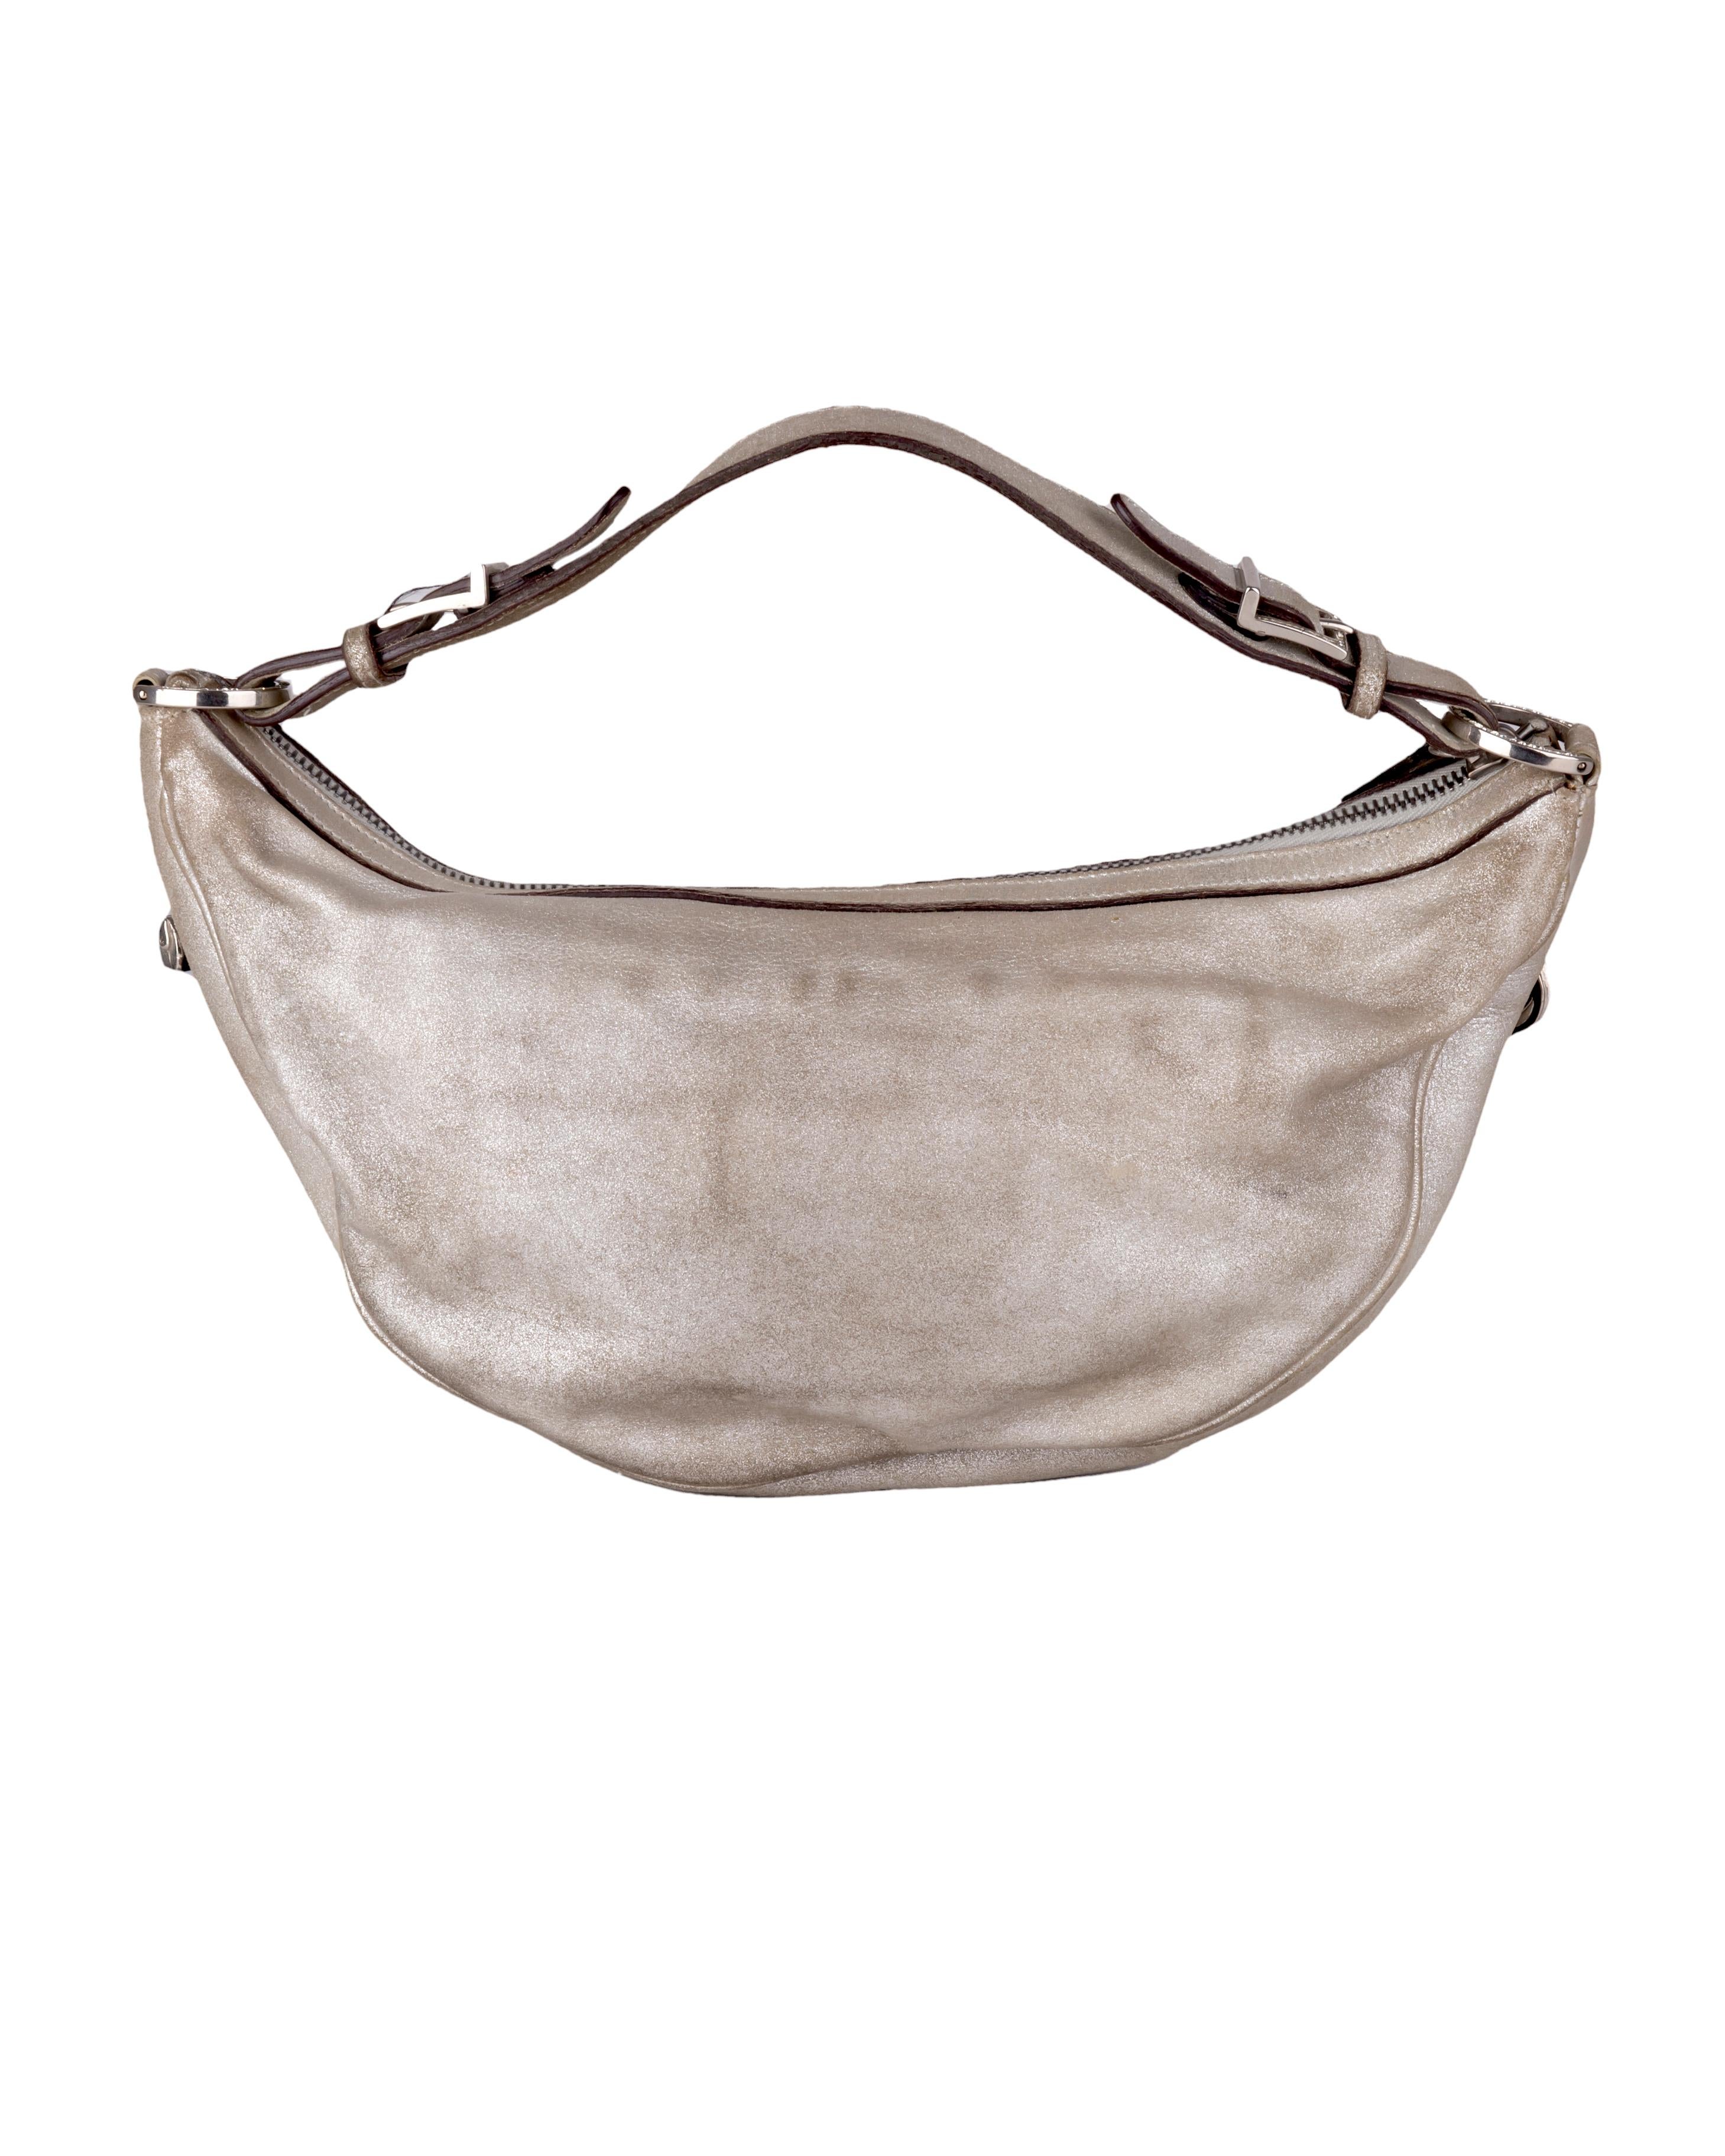 Women's or Men's Versace S/S 2004 silver half moon charms bag 